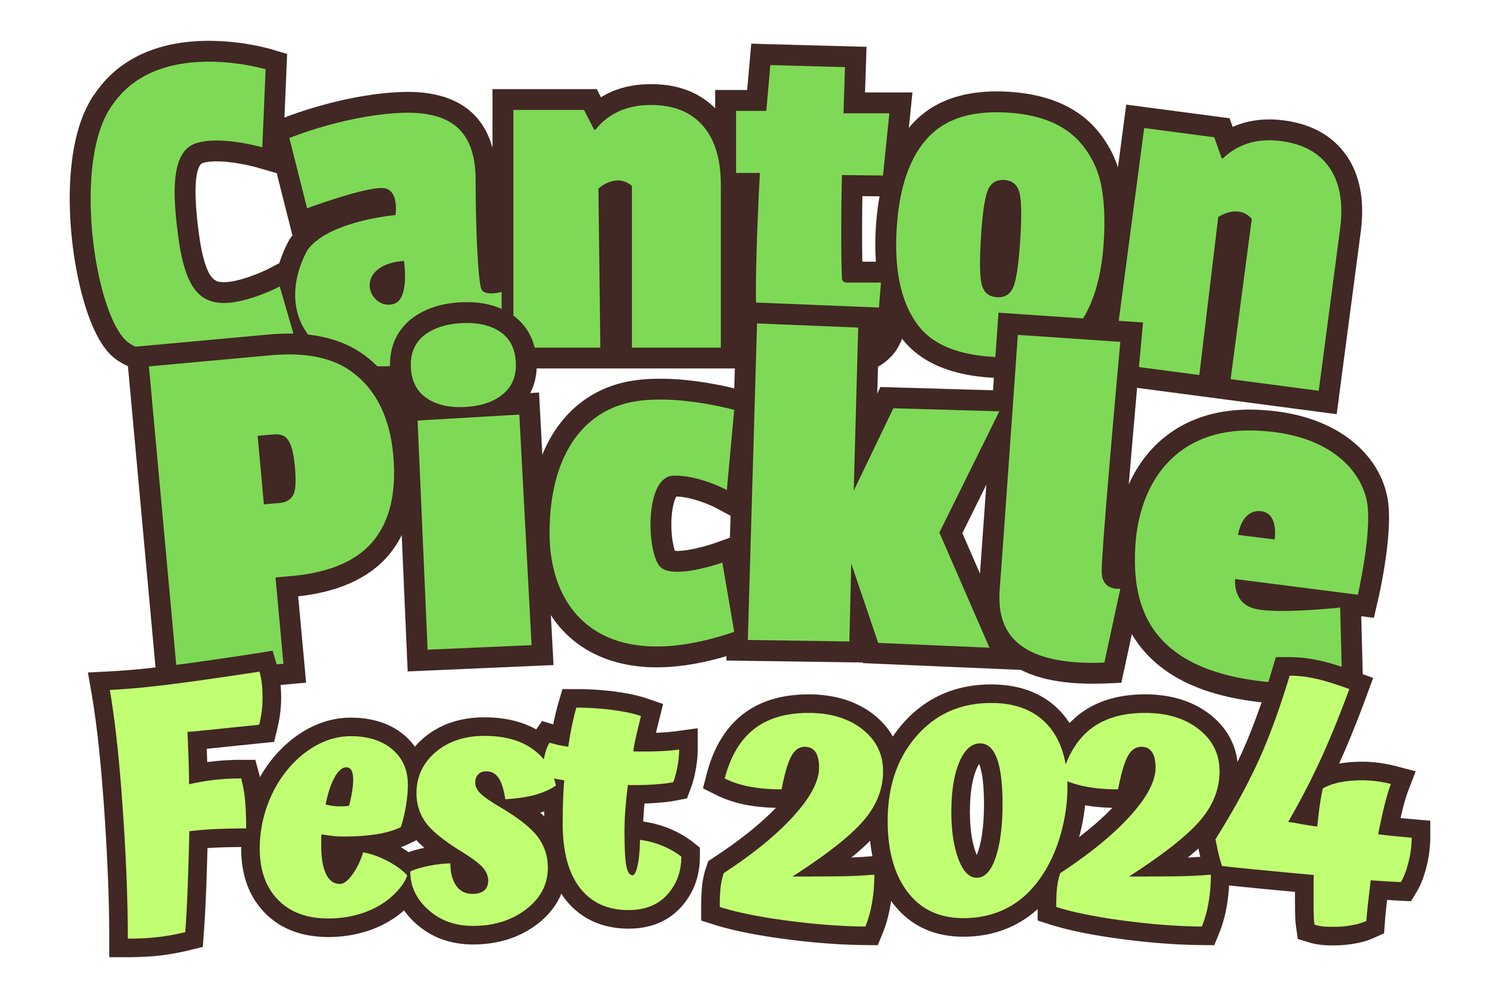 Canton Pickle Fest